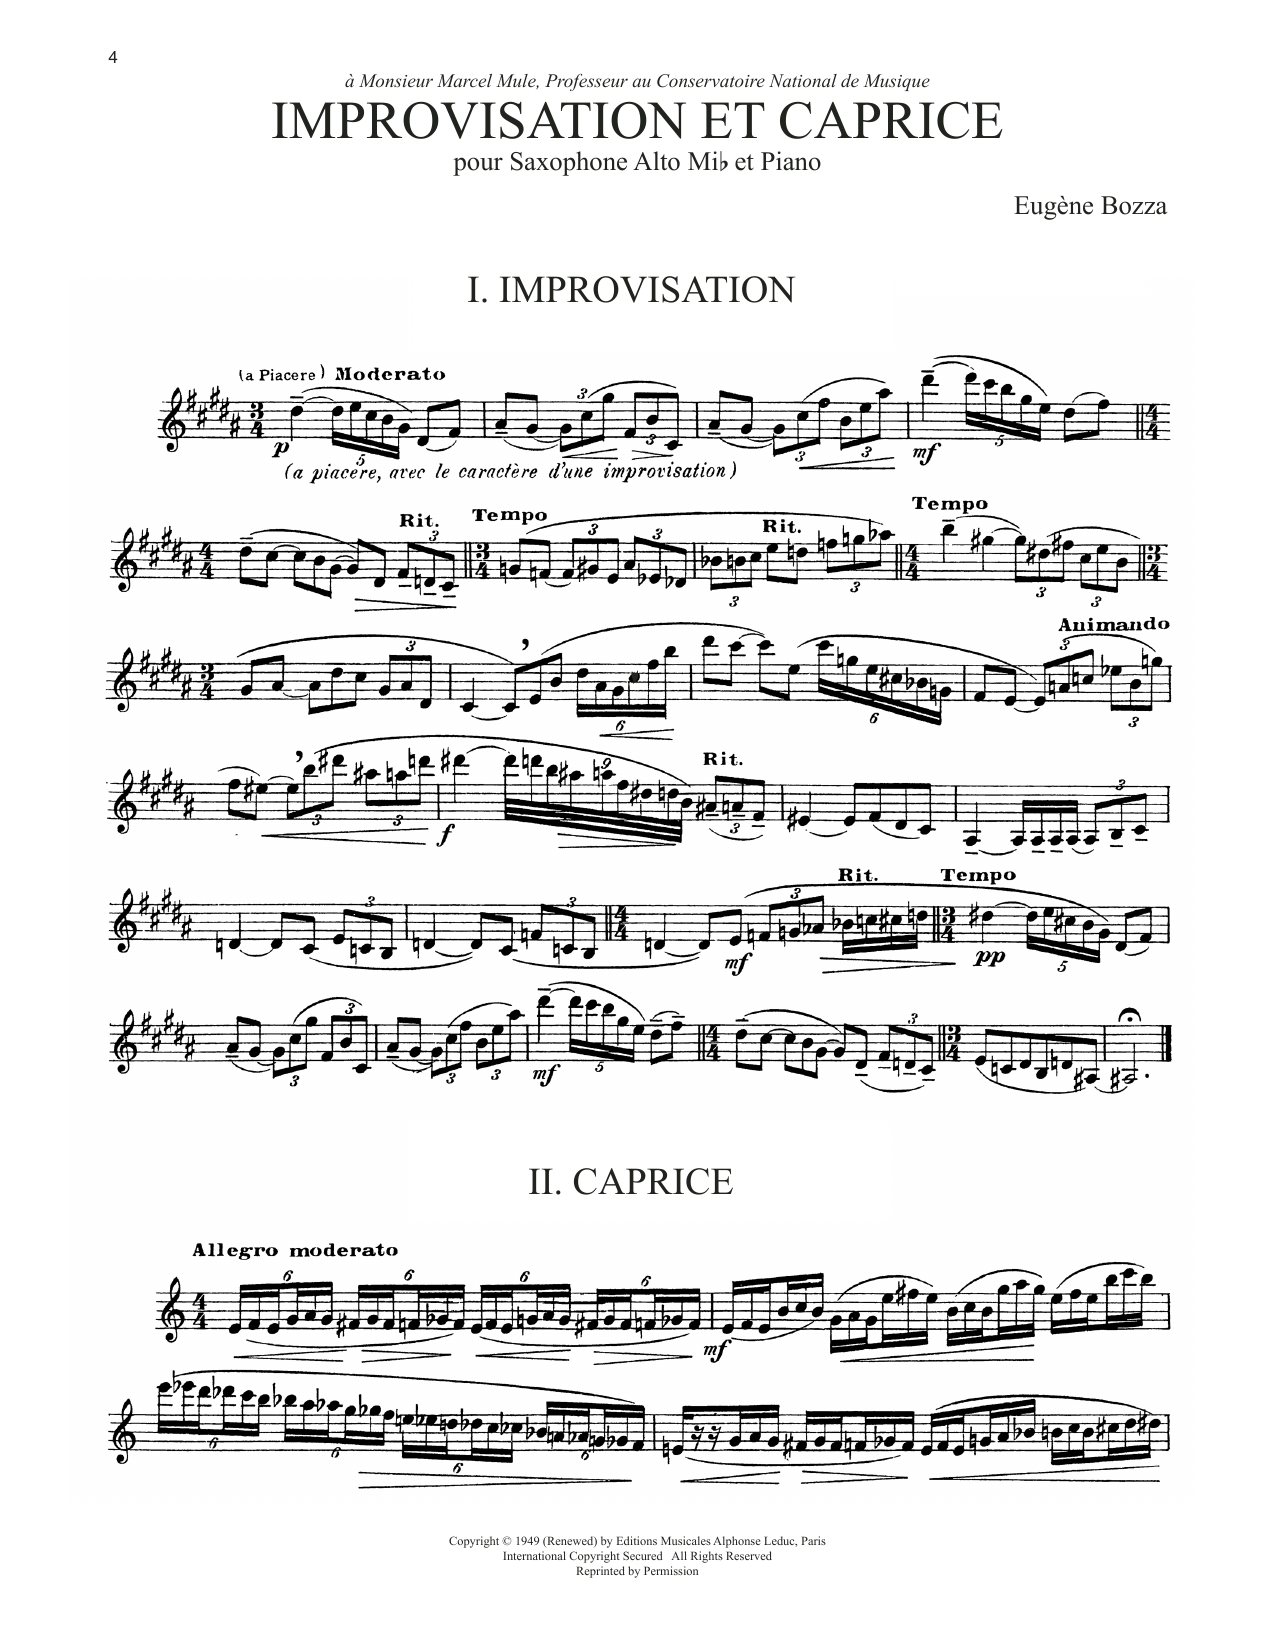 Eugène Bozza Improvisation Et Caprice Sheet Music Notes & Chords for Alto Sax Solo - Download or Print PDF